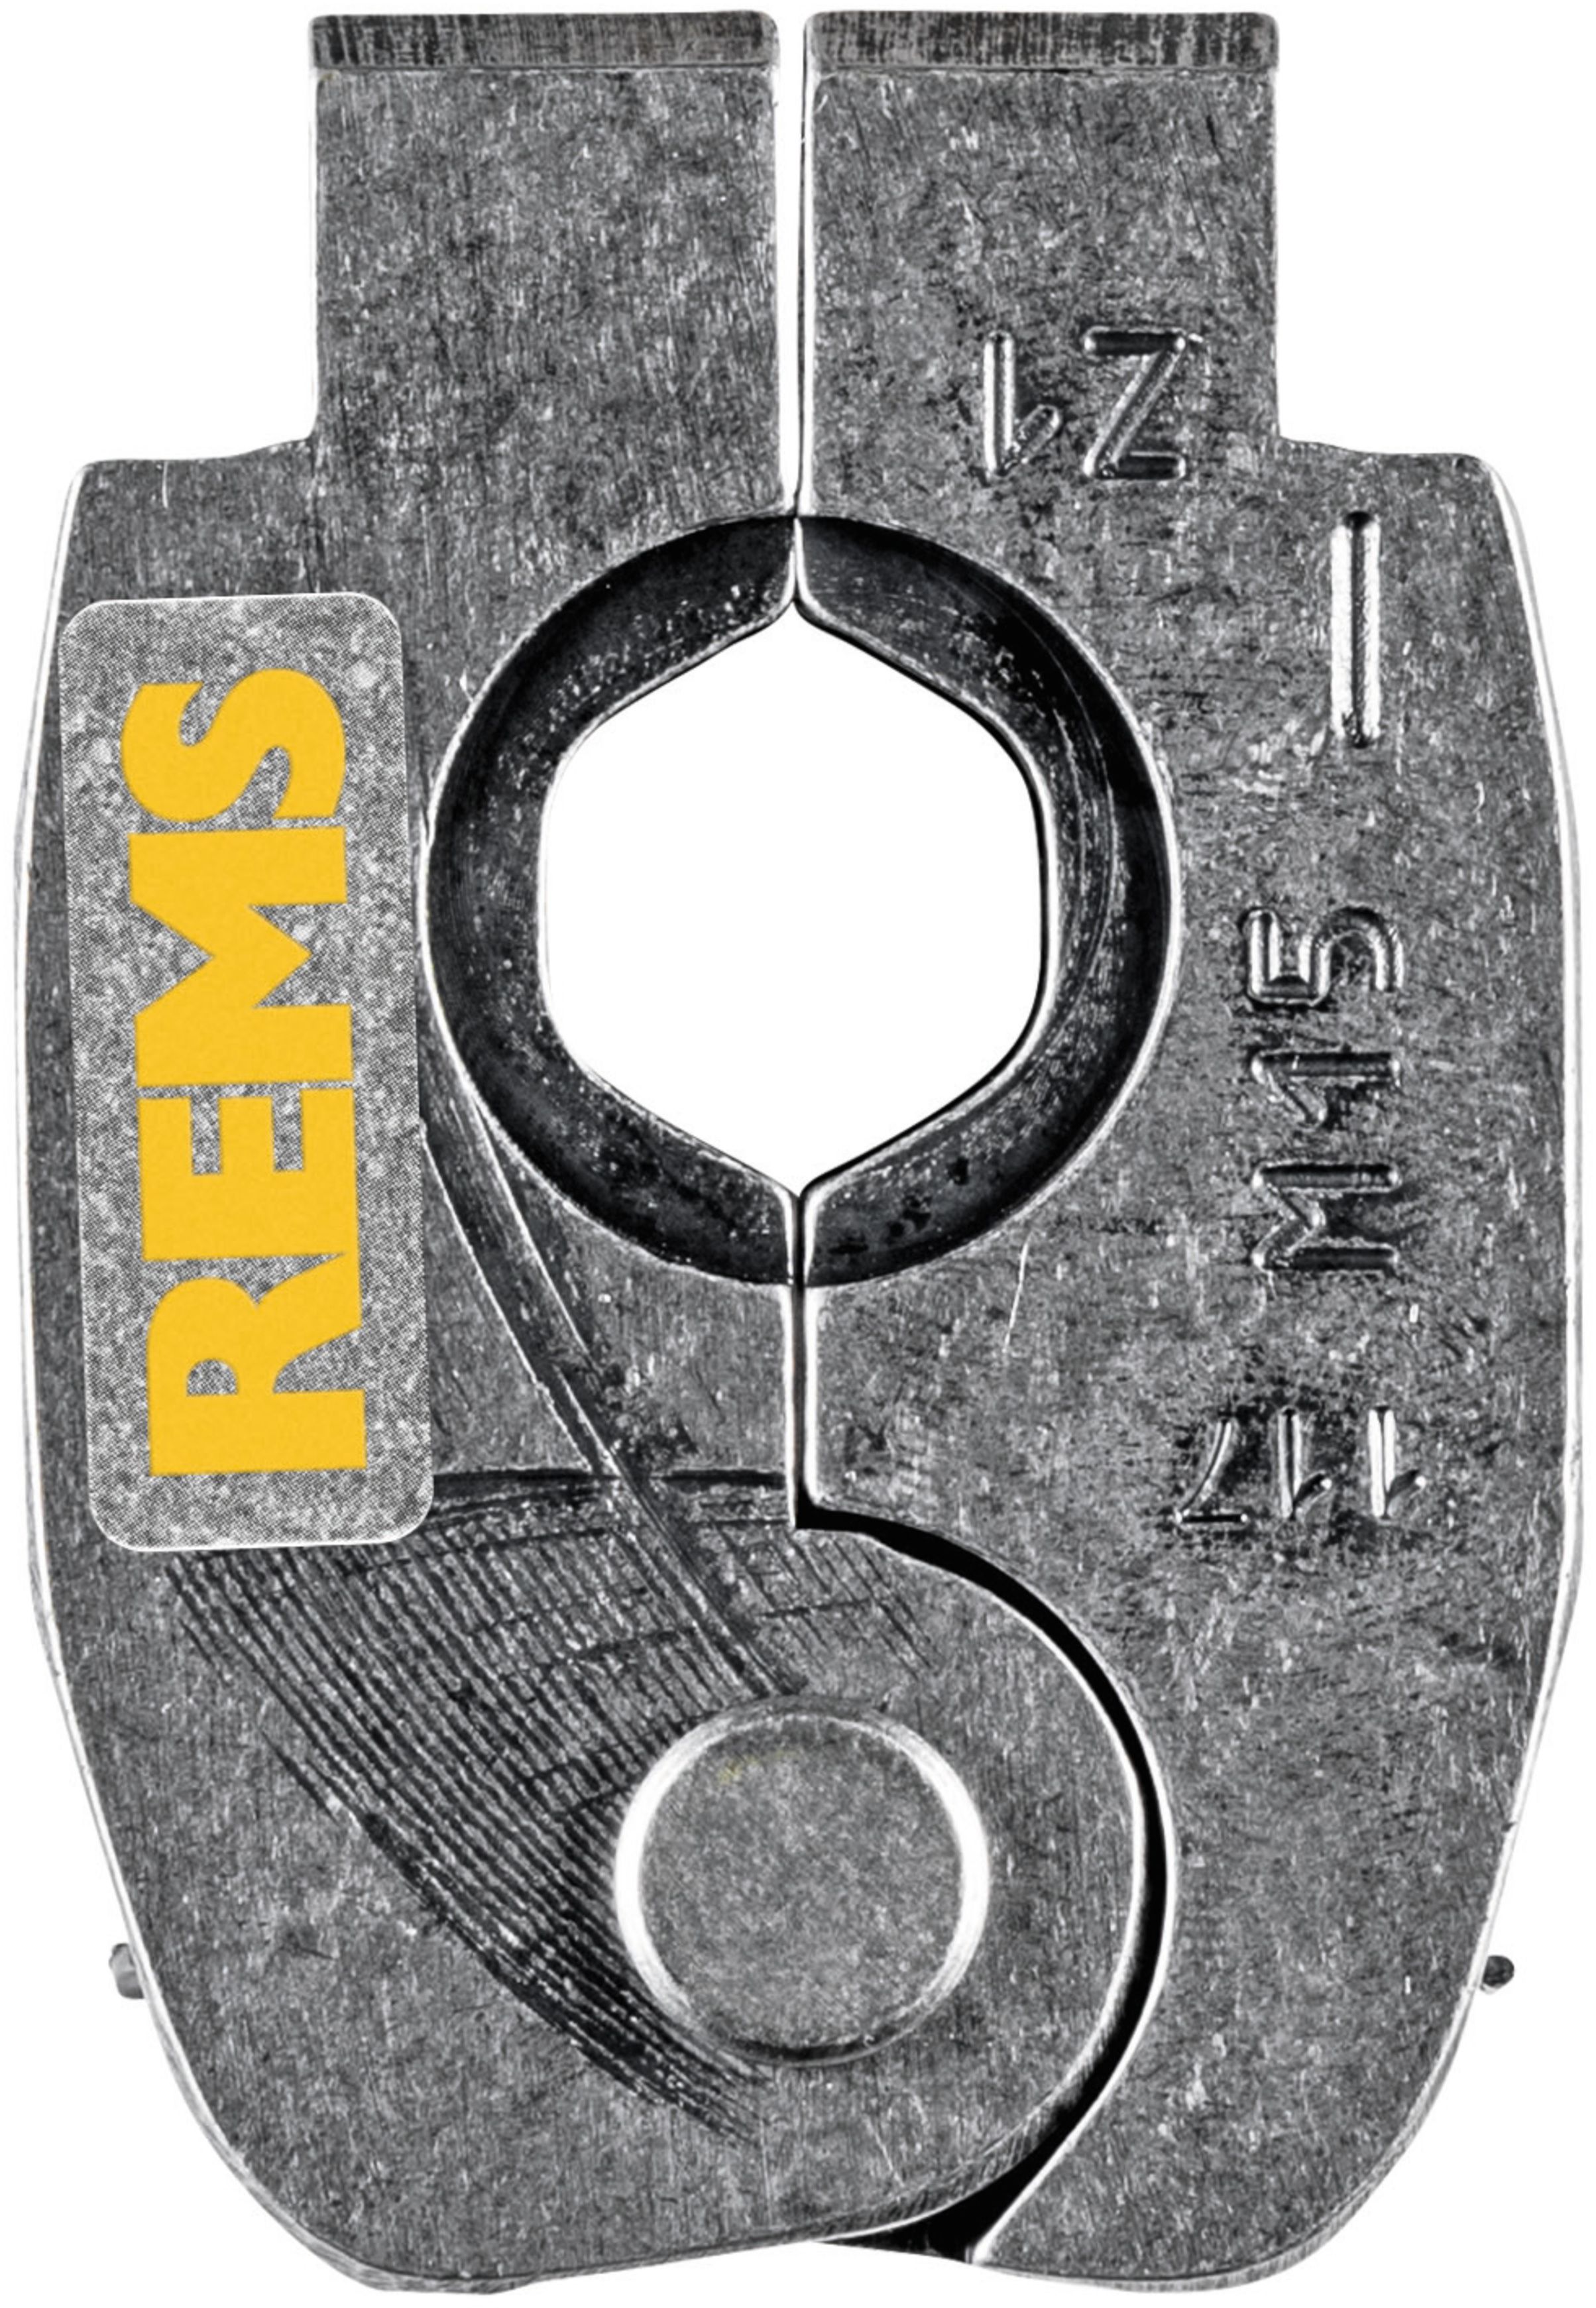 REMS PRESSRING M 15 45° (PR-2B) 574522 R, für Mini-Press ACC - Sanitärwerkzeuge